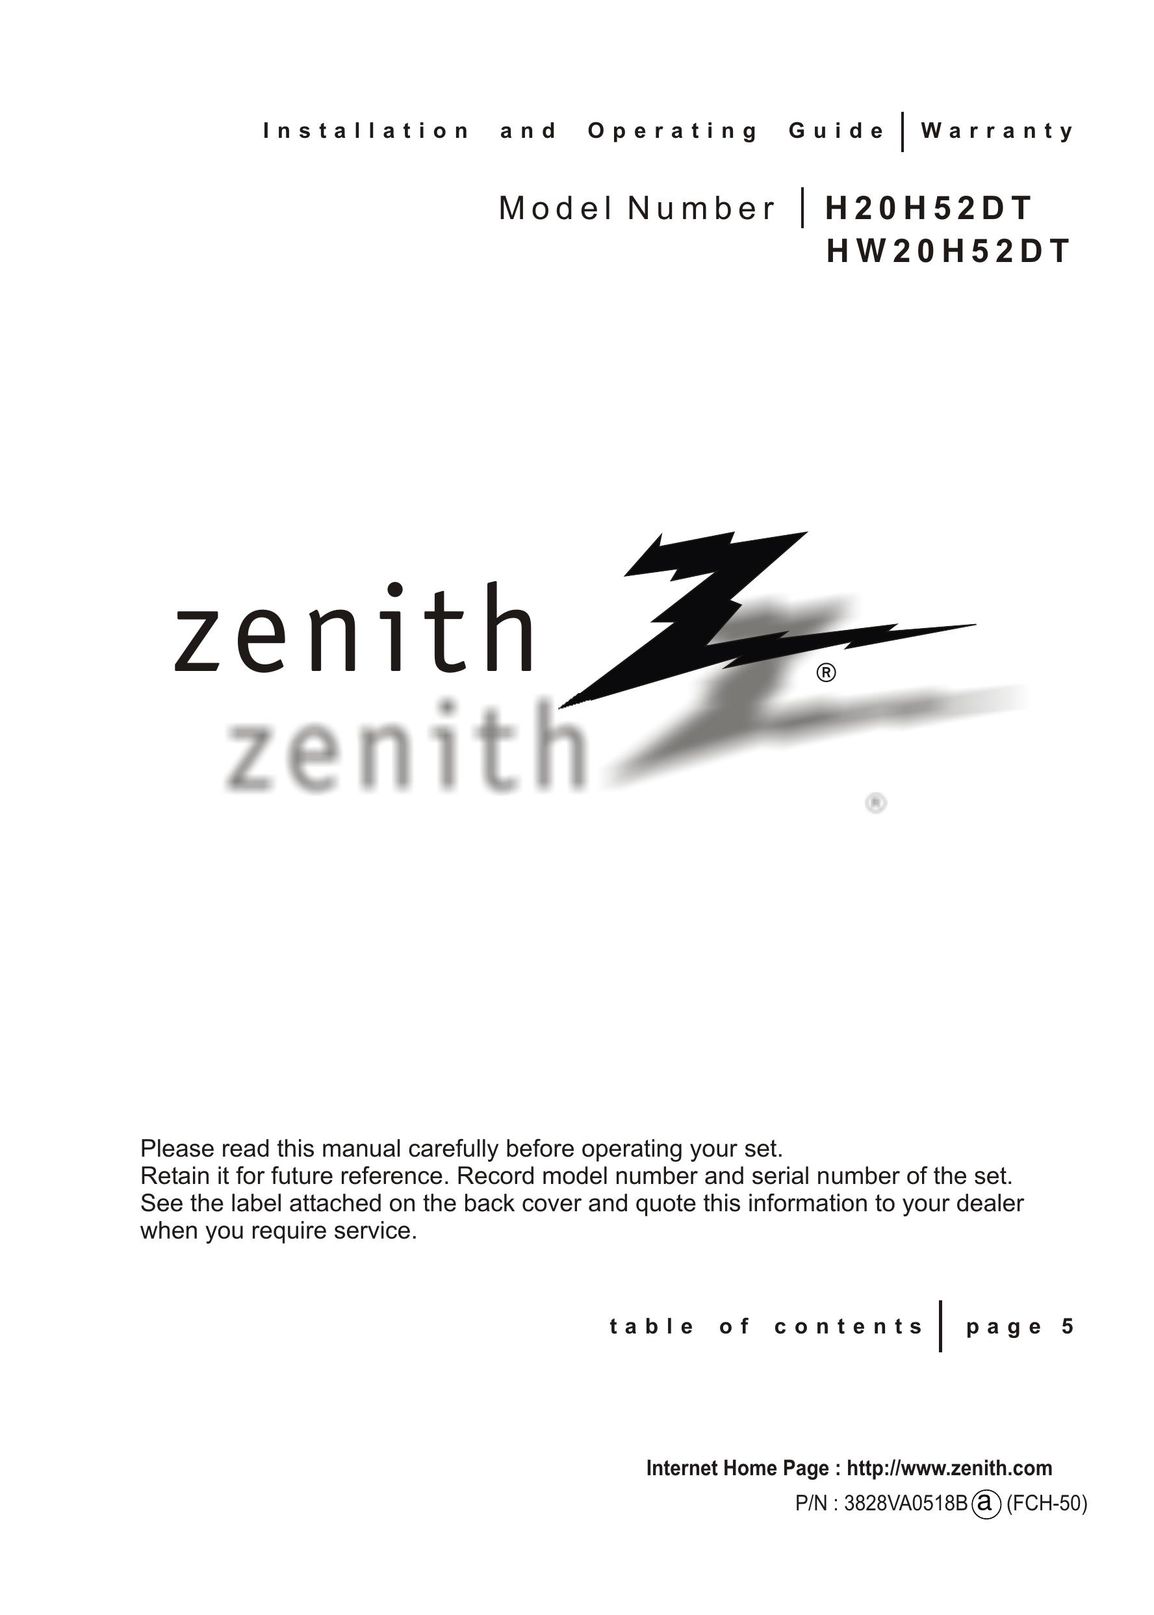 Zenith HW20H52DT Flat Panel Television User Manual